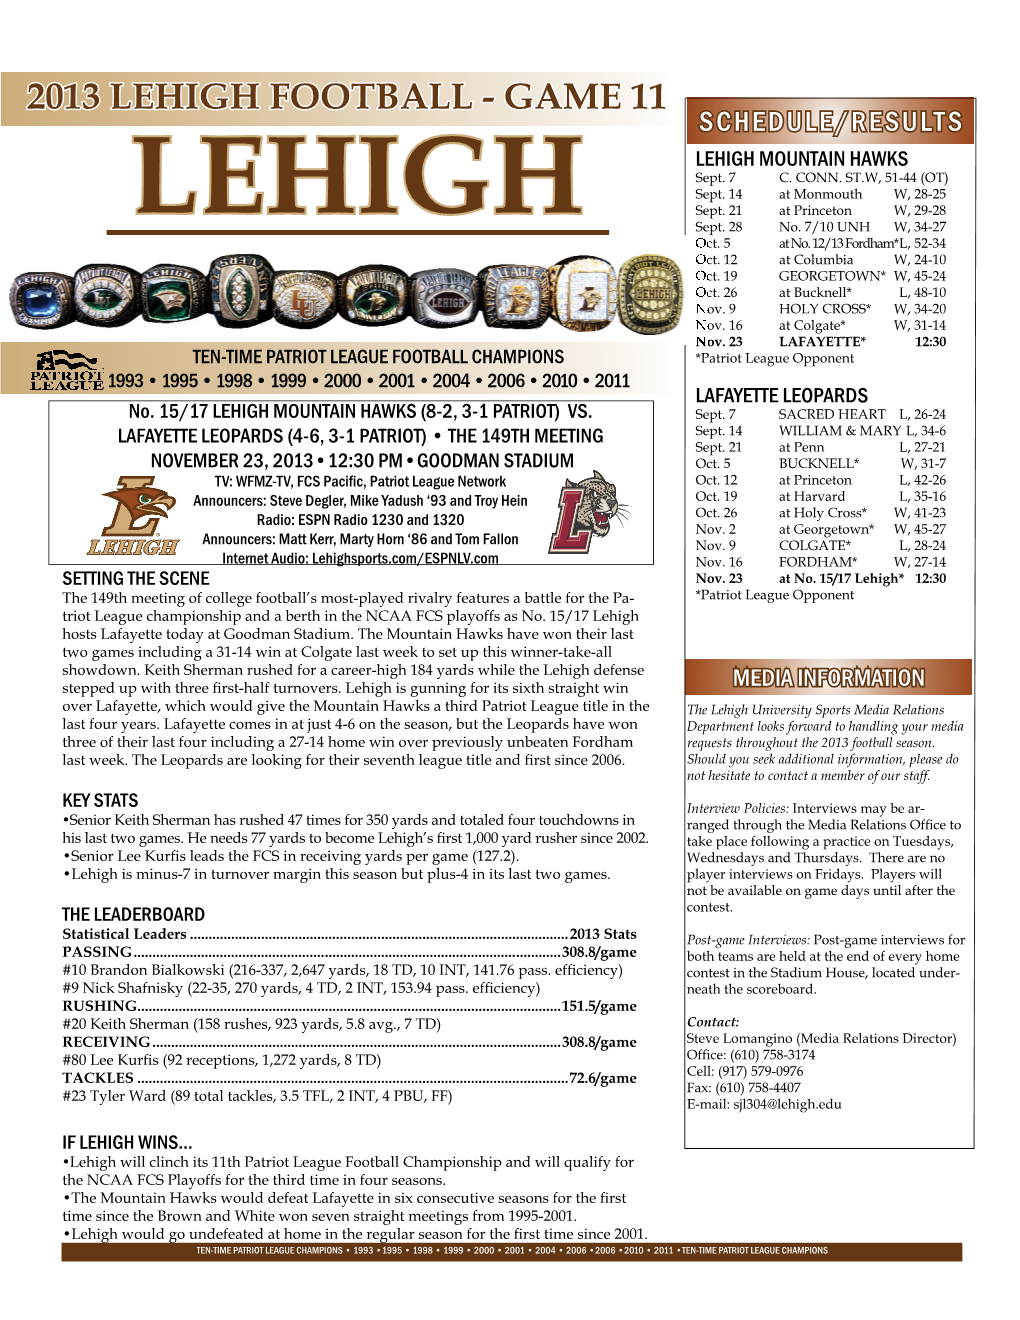 Lehigh Game Notes